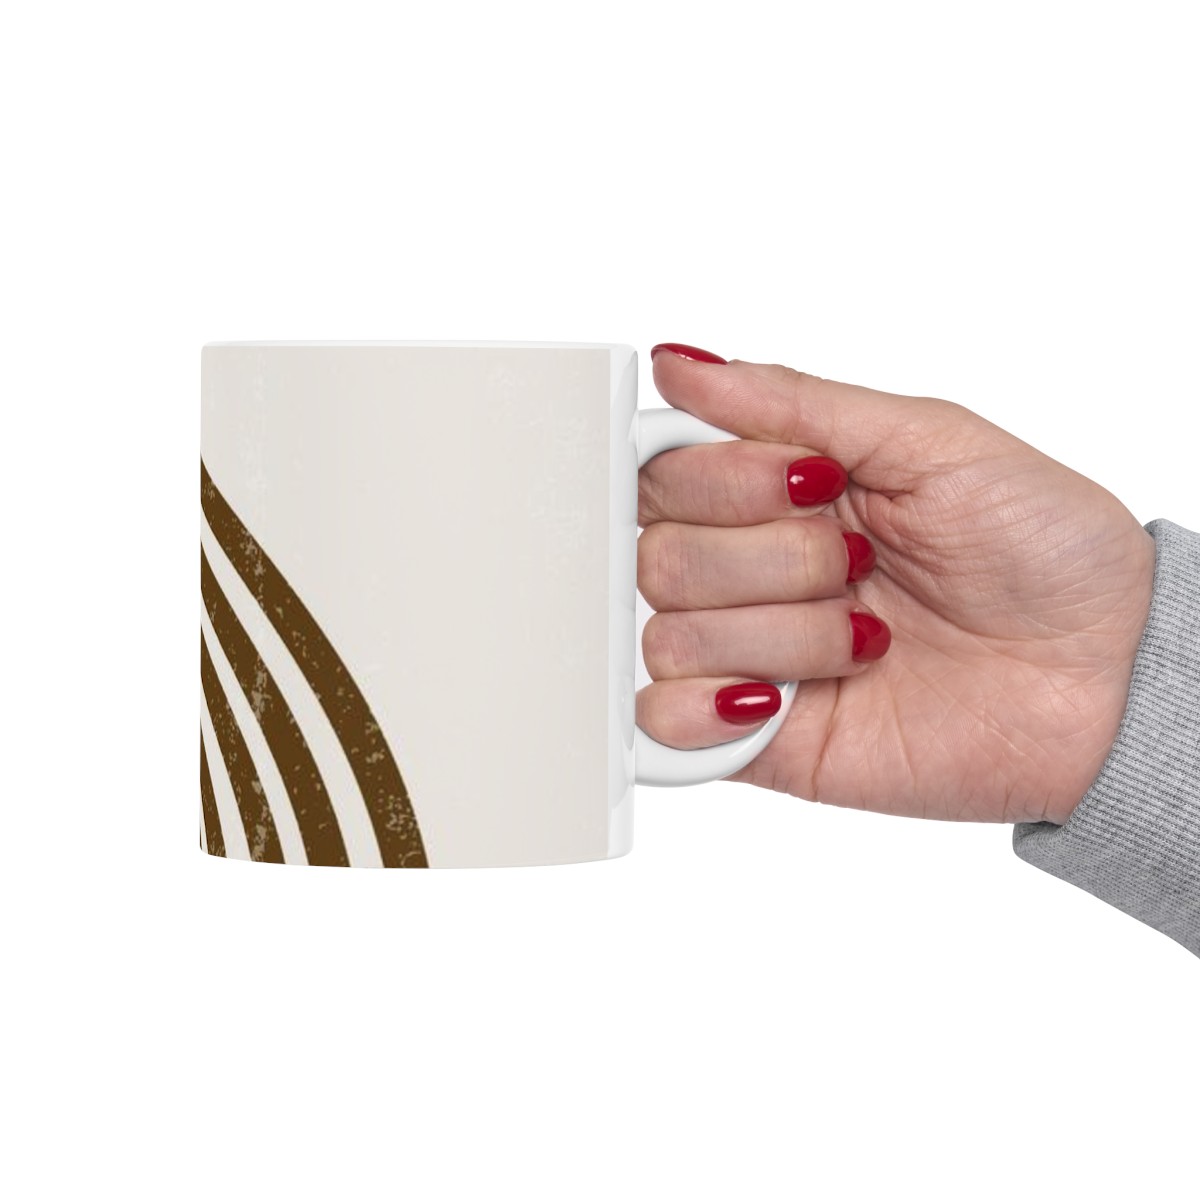 Ceramic Mug Brown Stripes product thumbnail image